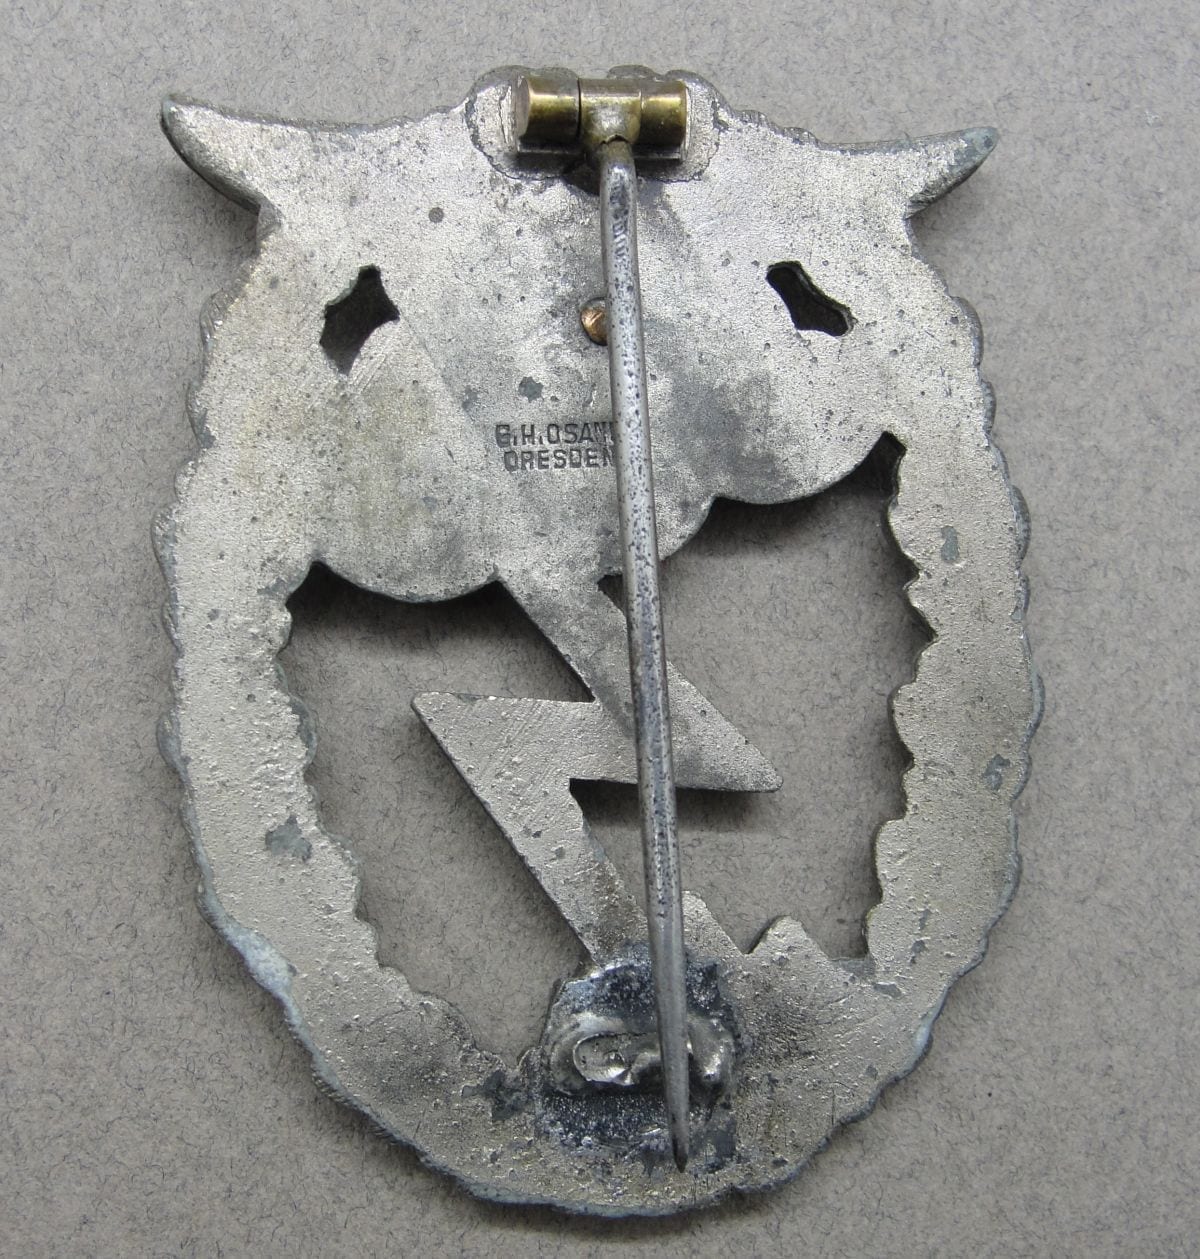 Luftwaffe Ground Assault Badge by "G.H. OSANG" Catch Gone